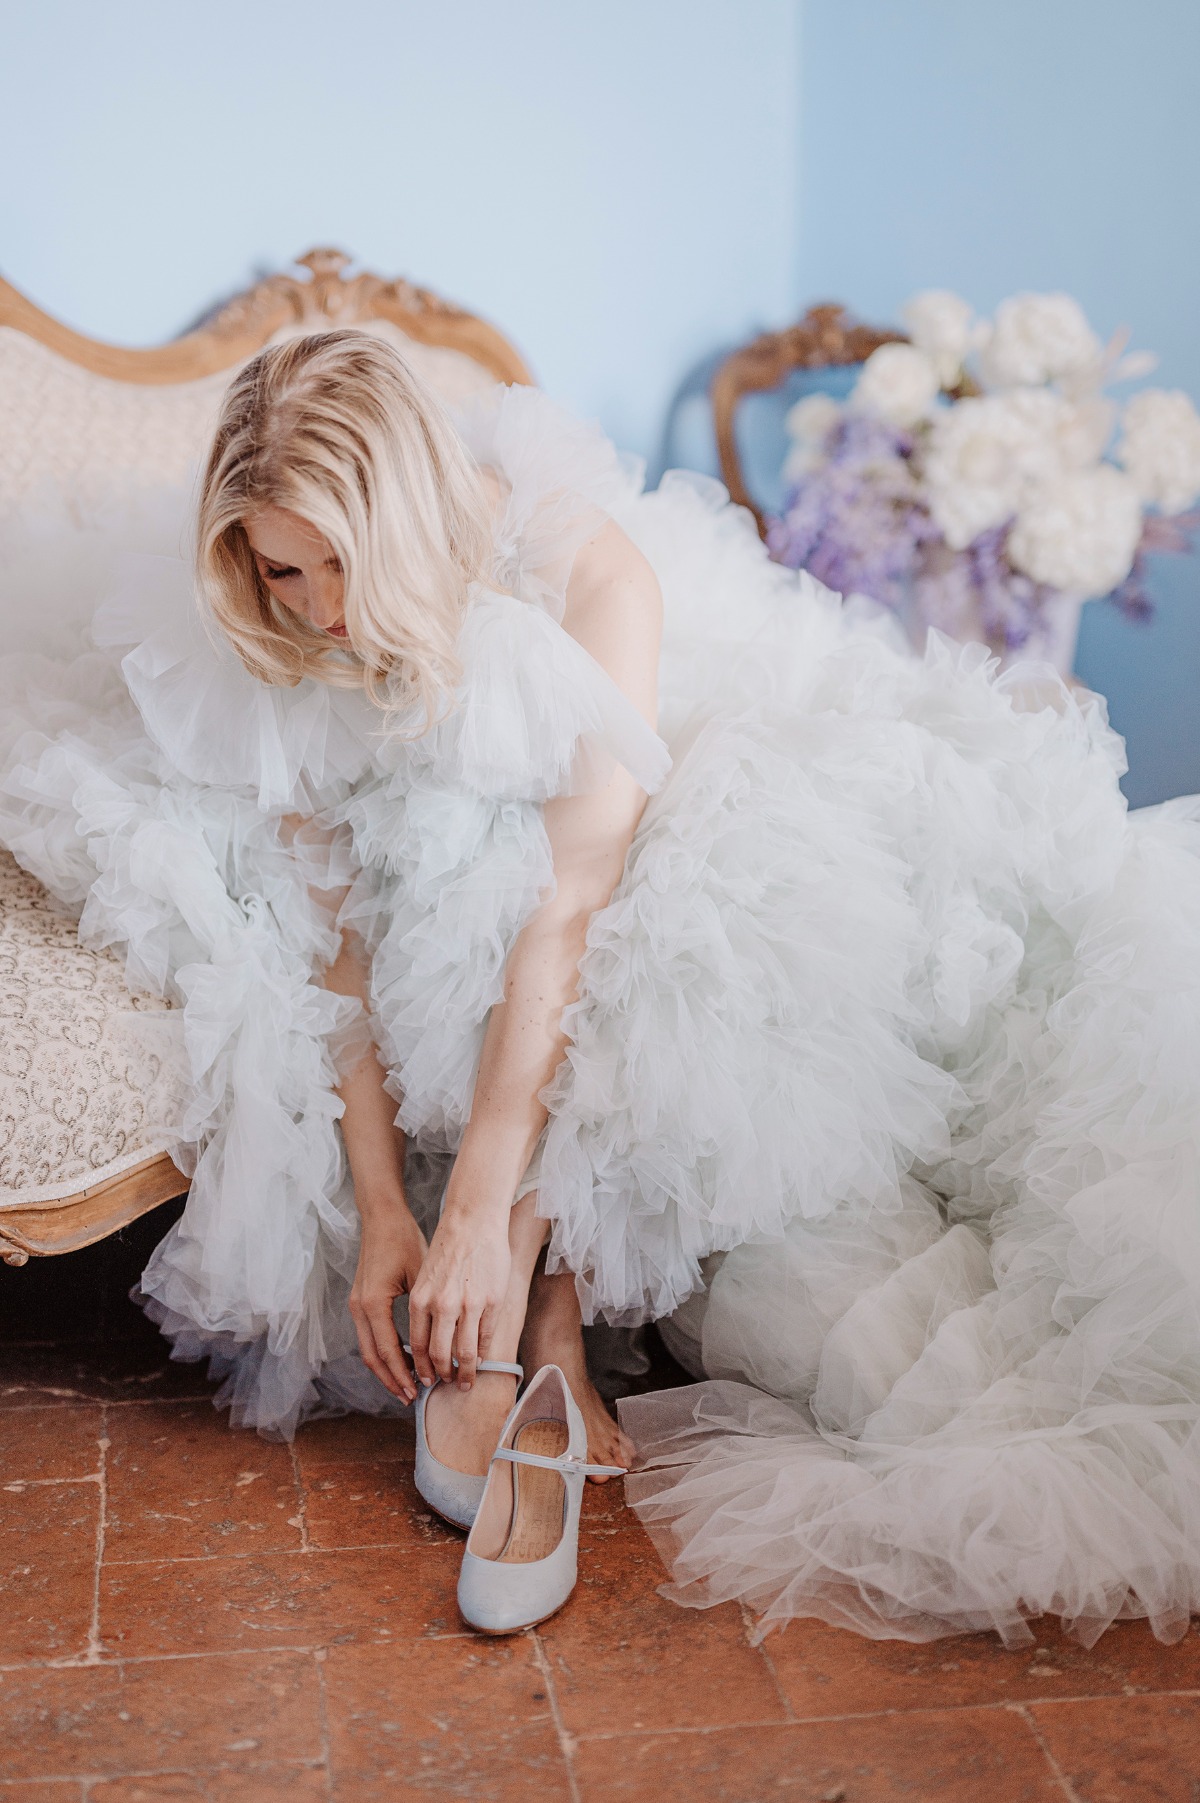 Bride in ruffled wedding dress putting on blue bridal shoes